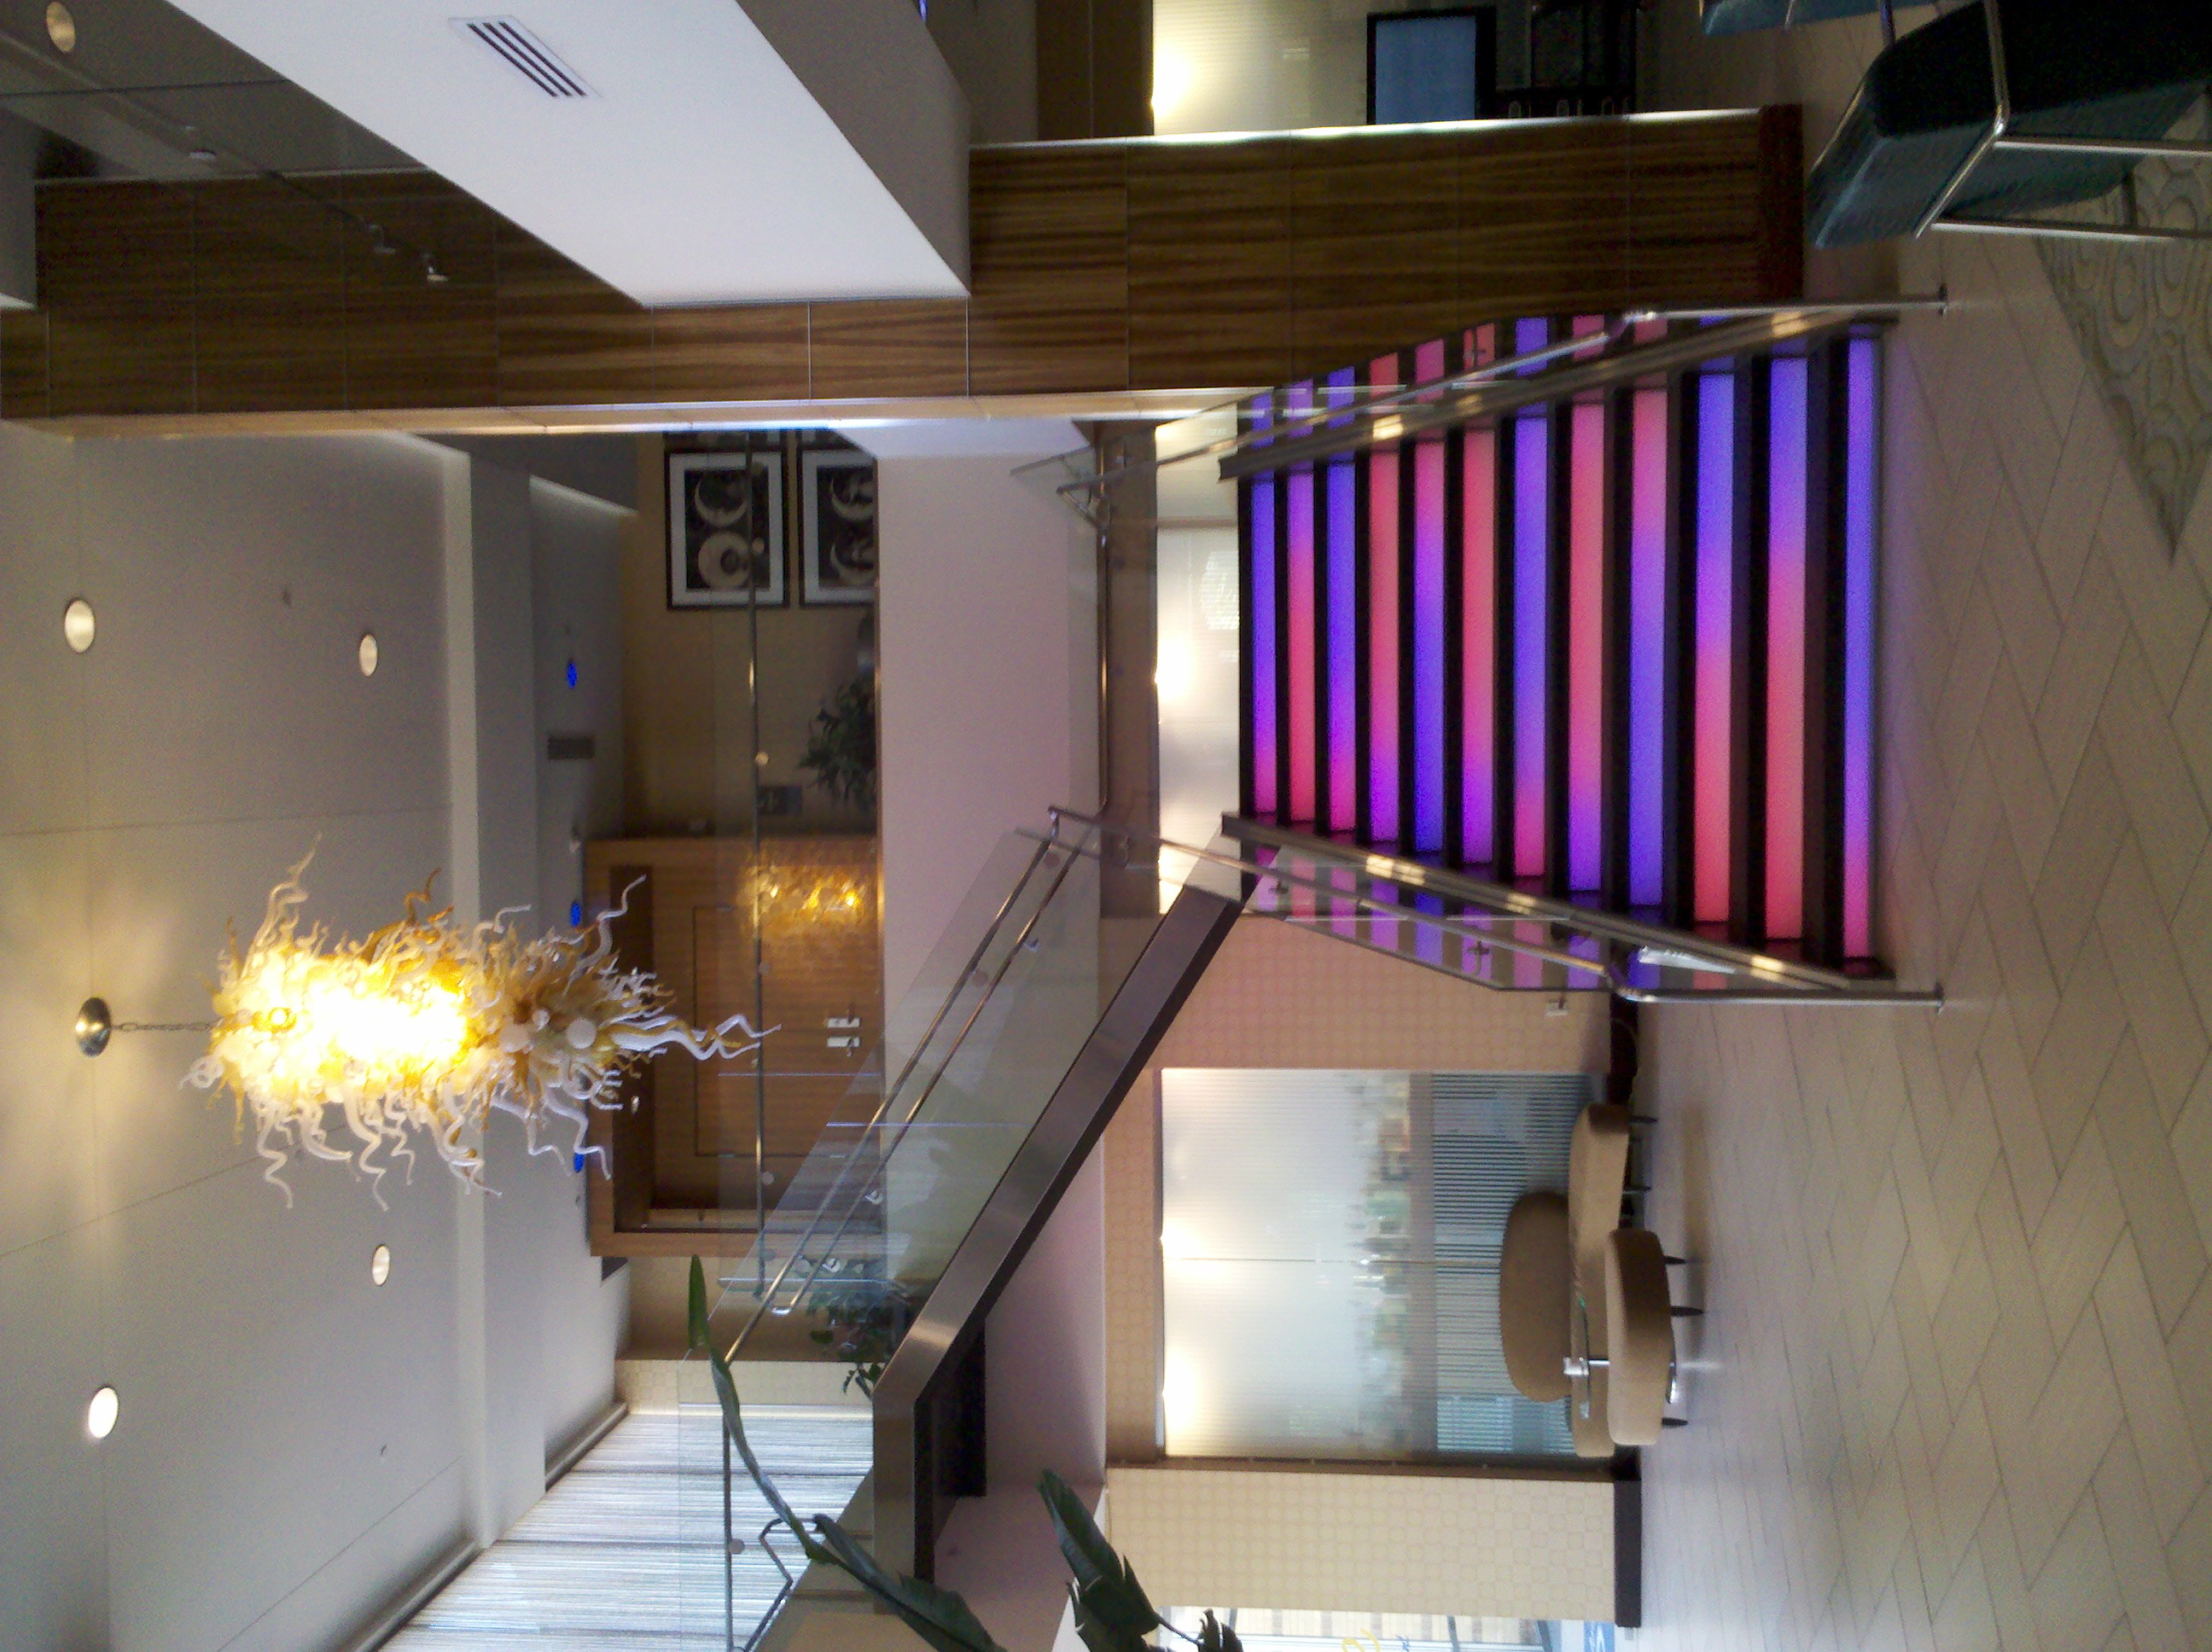 Lobby of the Moonrise Hotel